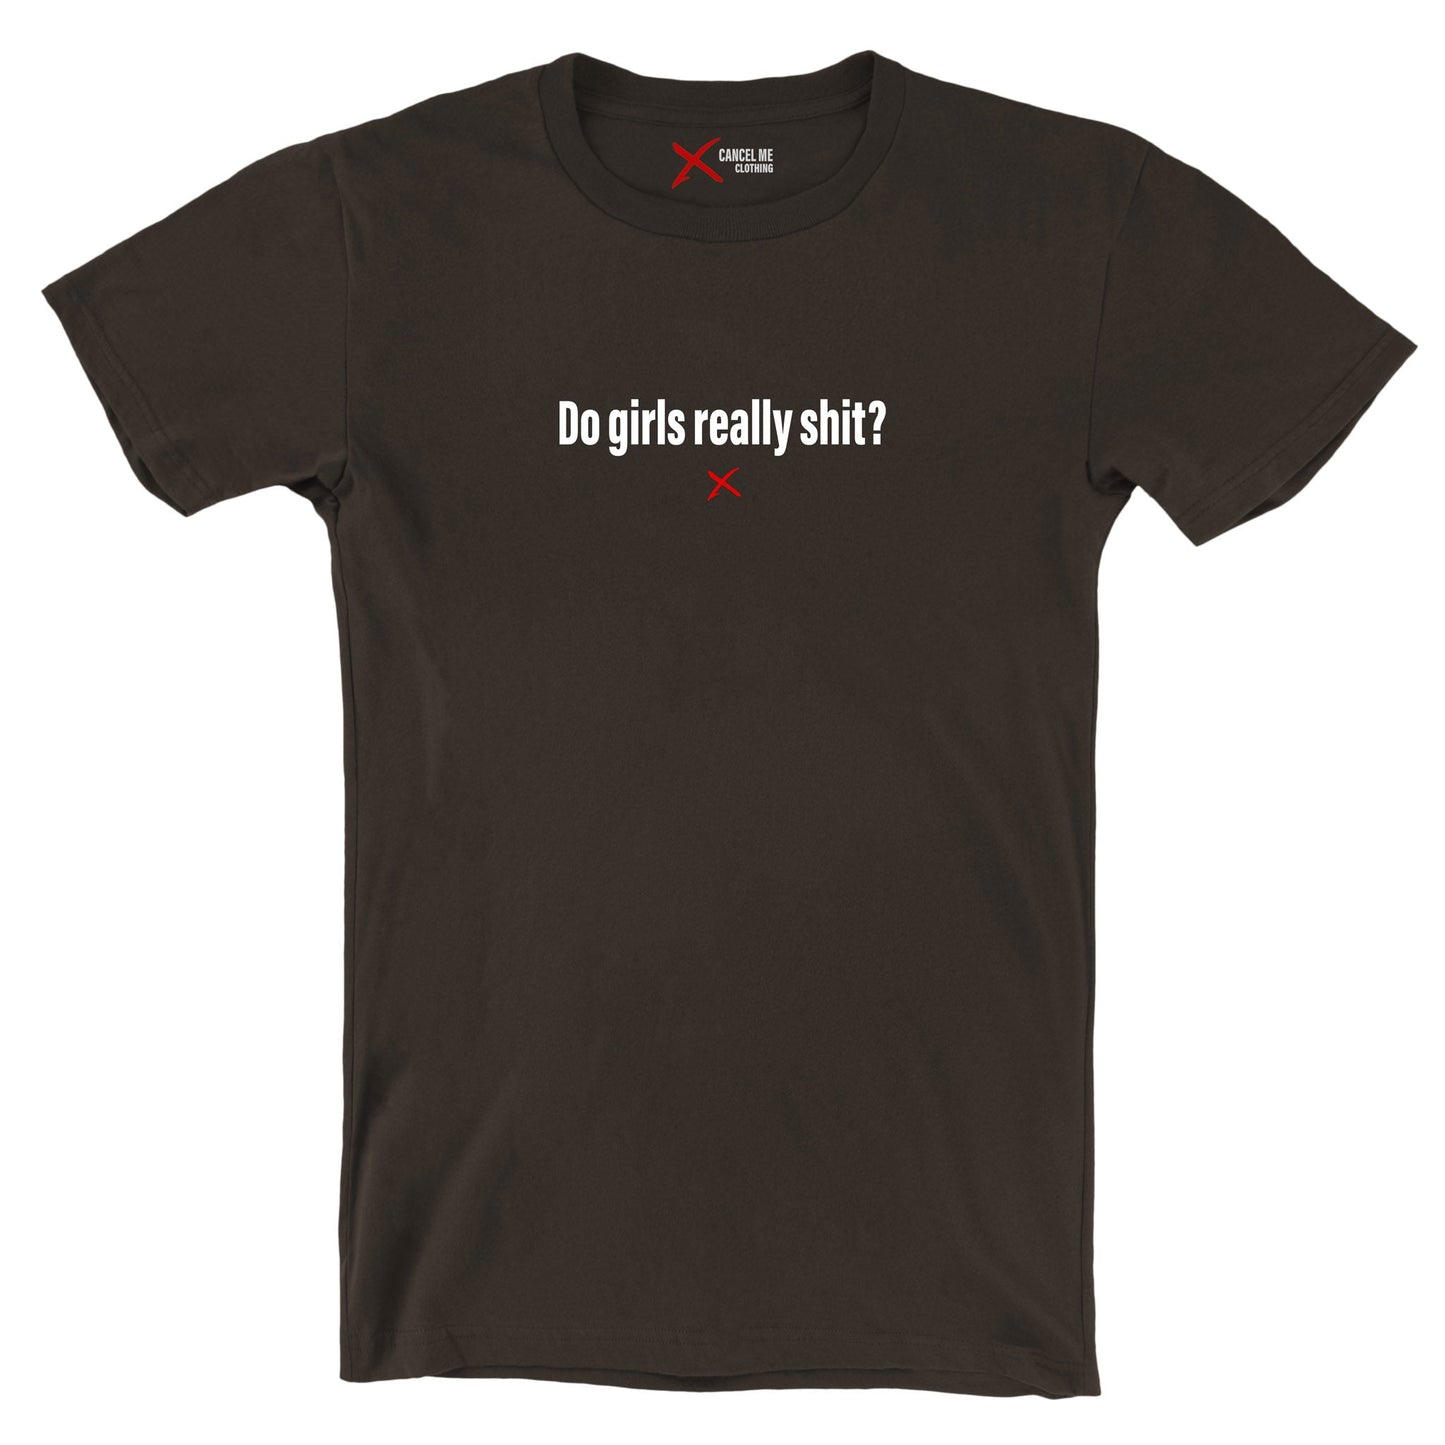 Do girls really shit? - Shirt